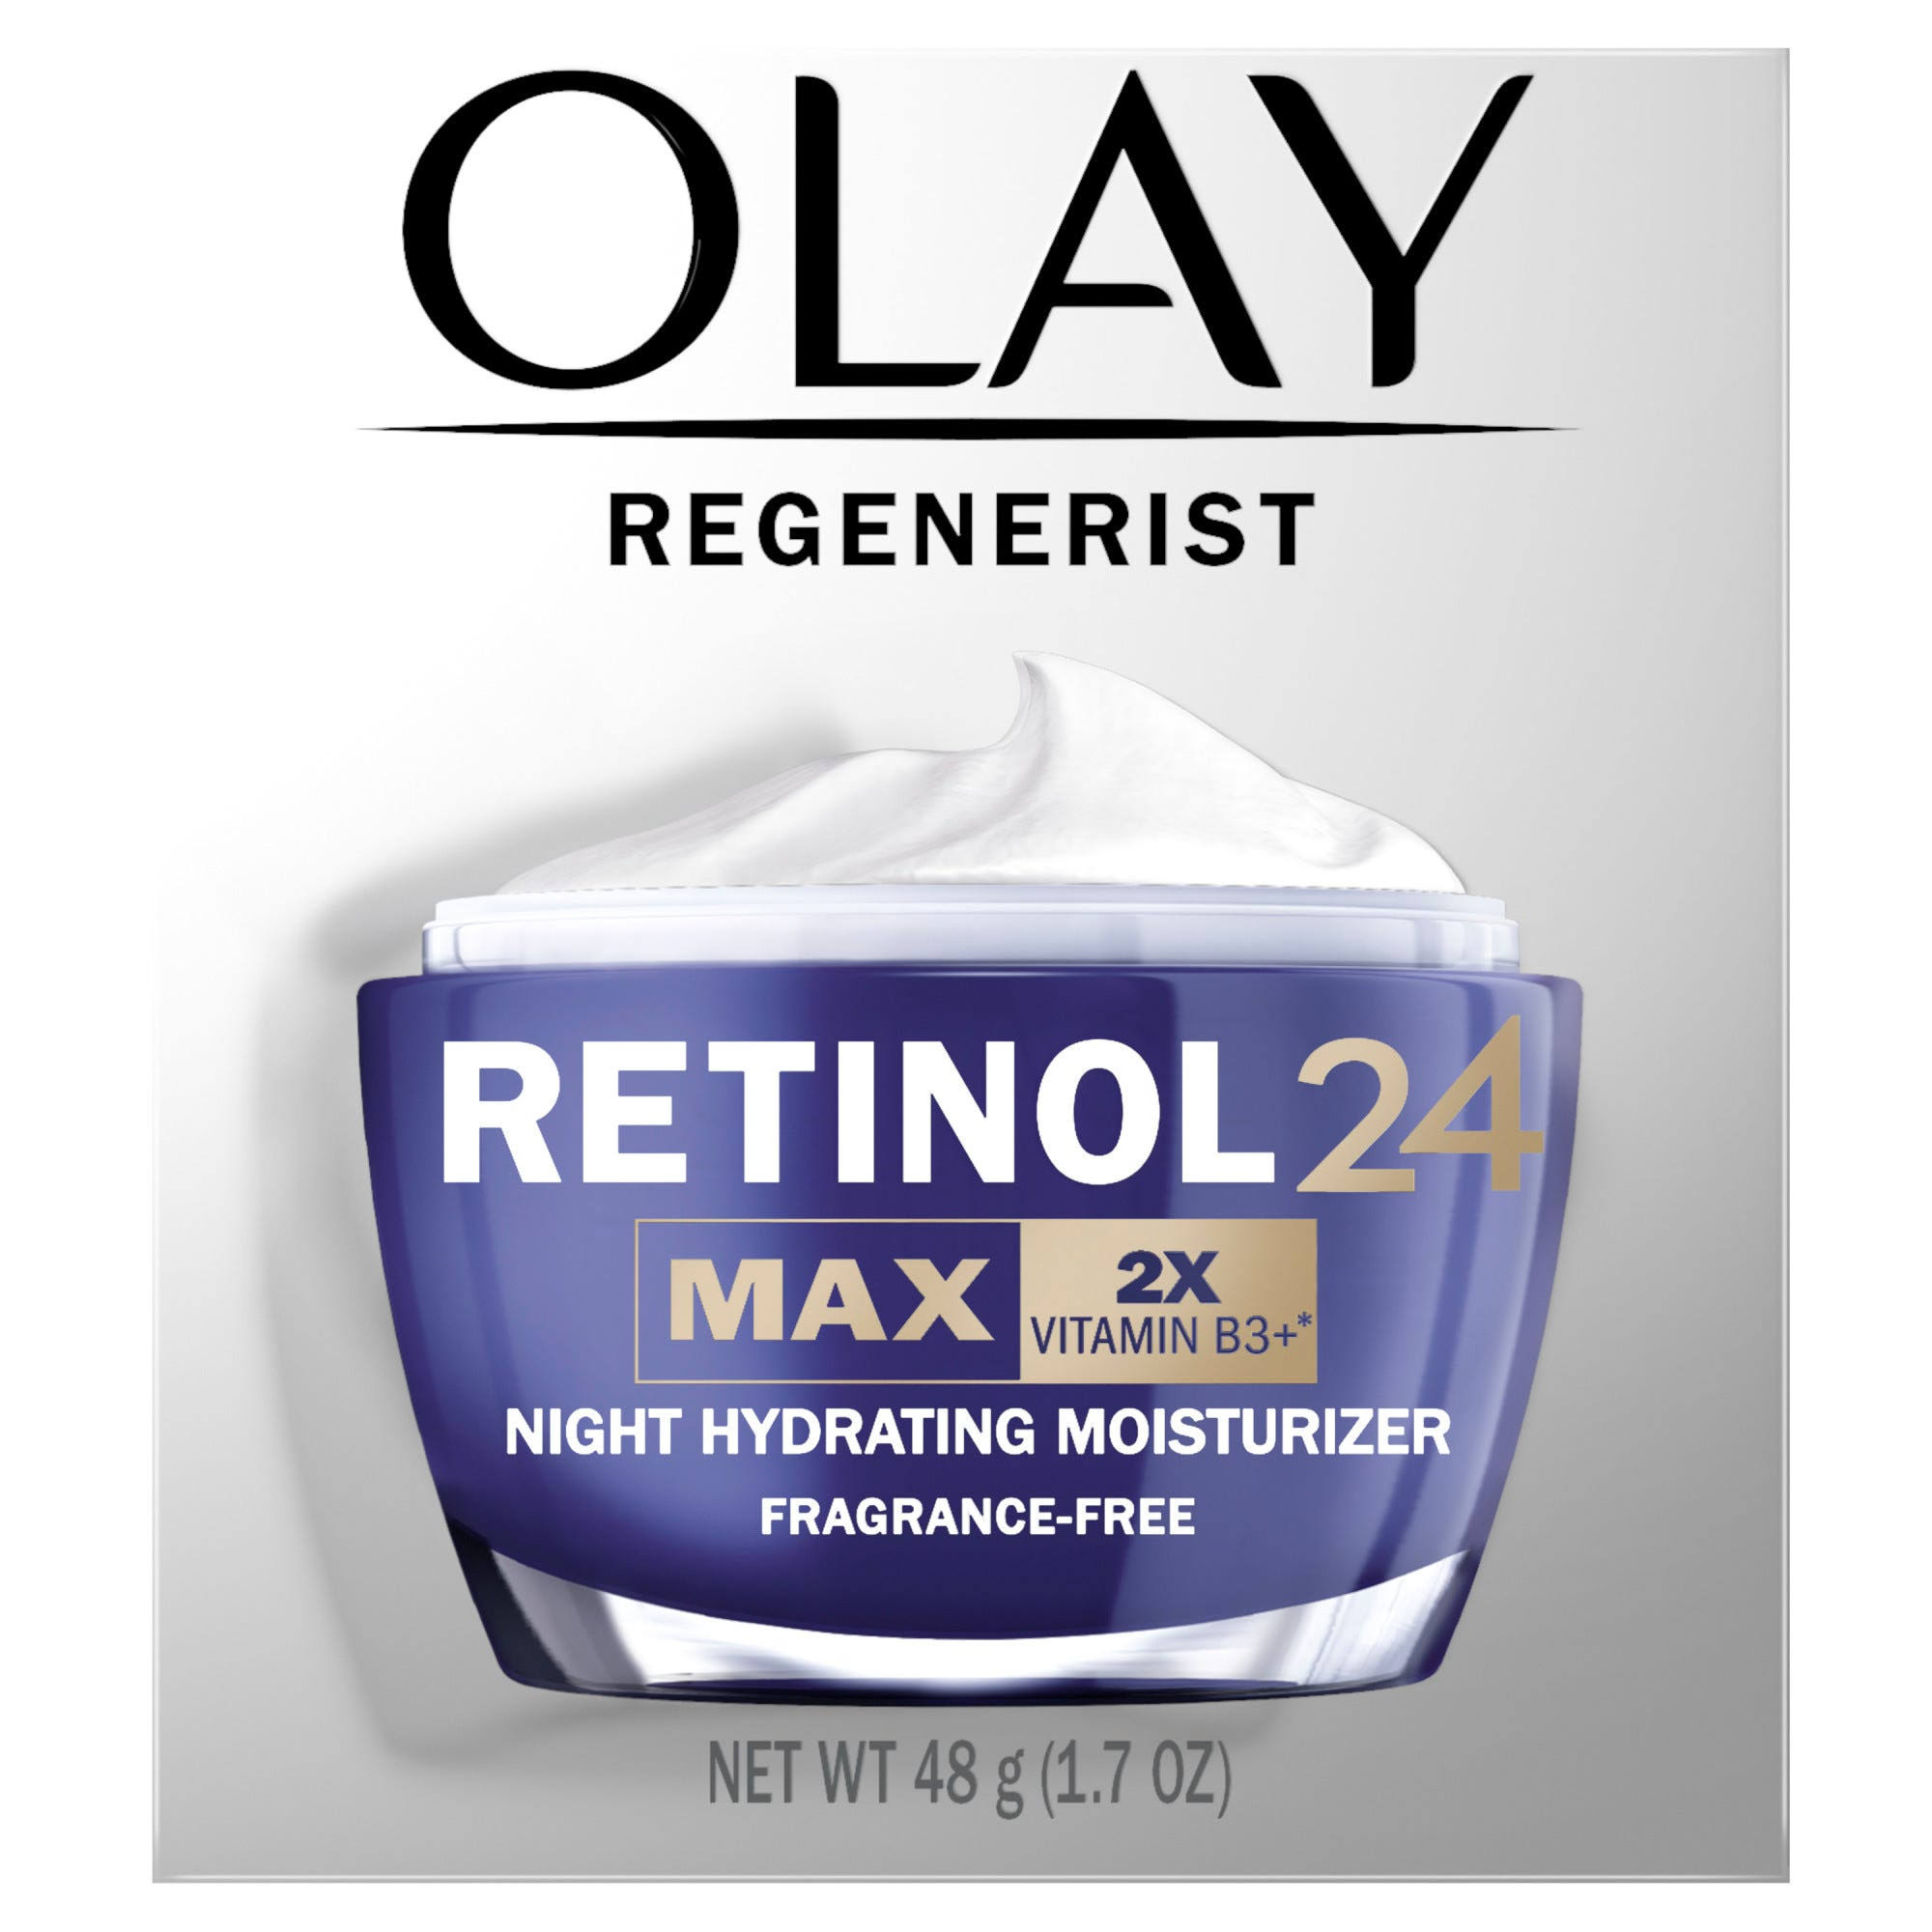 Olay Regenerist Retinol 24 MAX Night Face Moisturizer, 1.7 oz